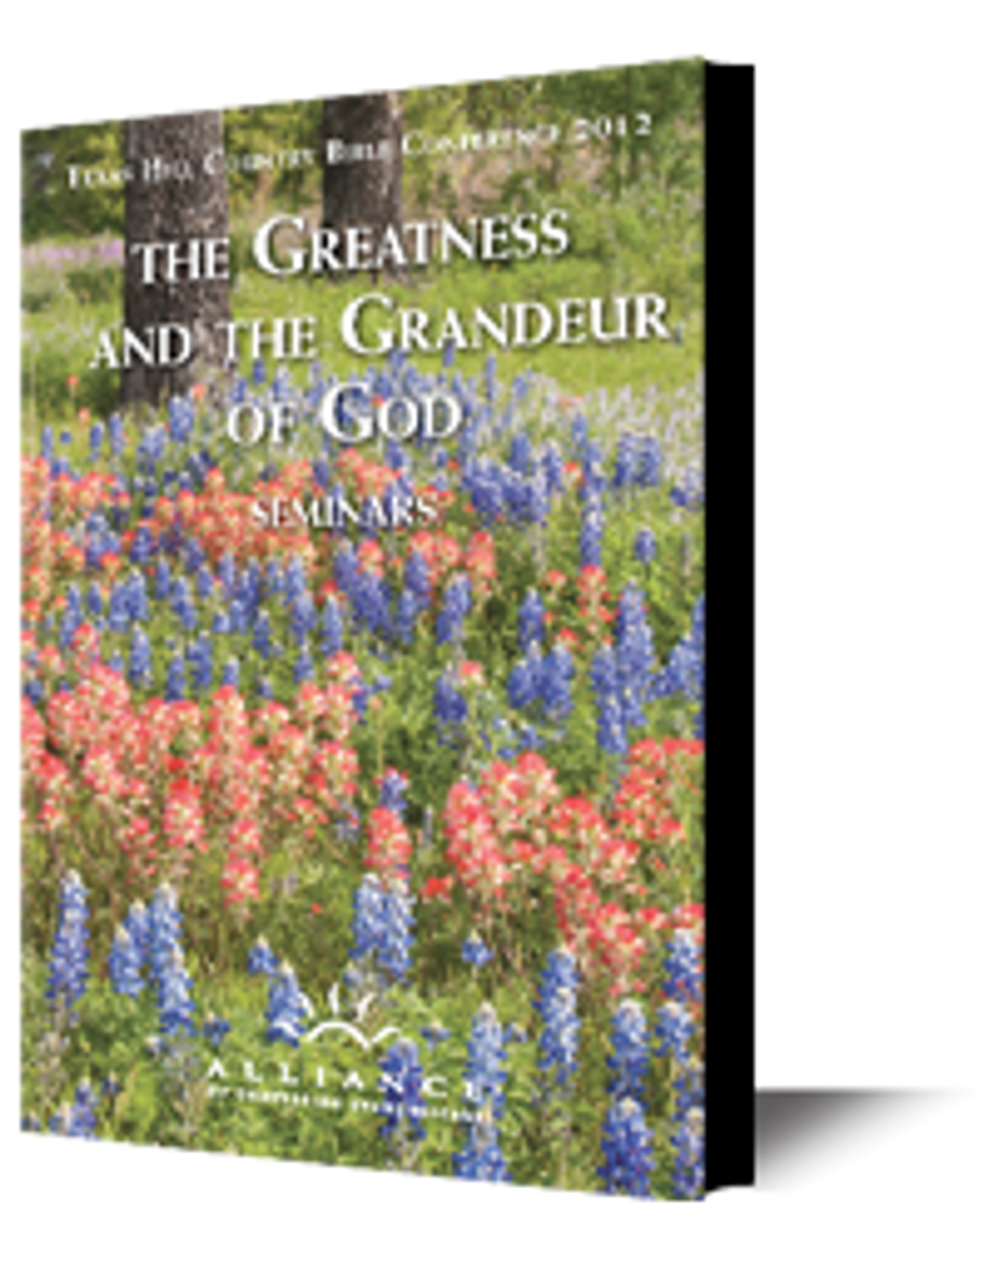 The Greatness and the Grandeur of God - Seminars (CD Set)